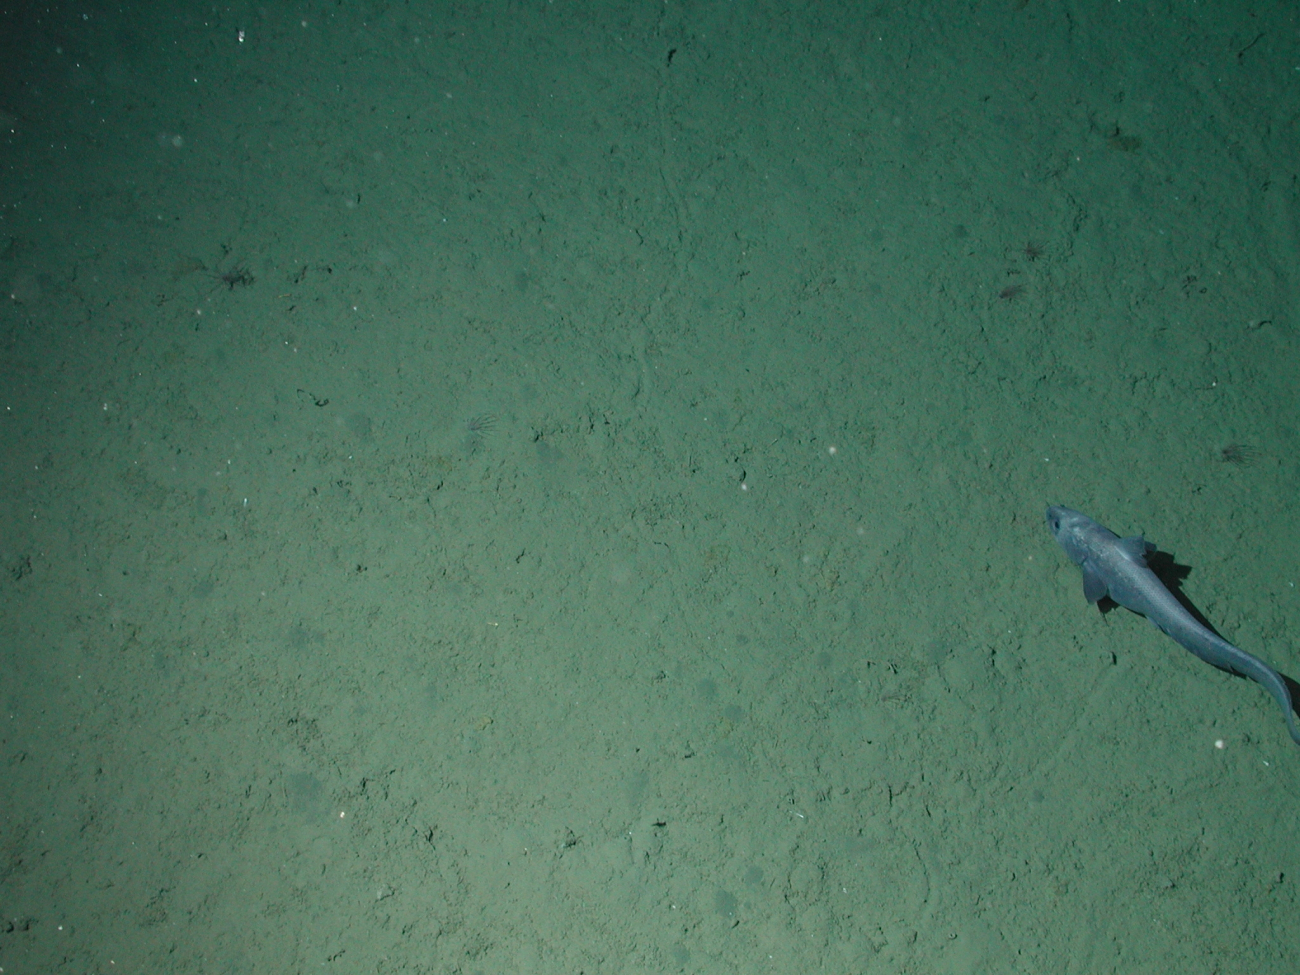 Rat-tailed fish and tracks on seafloor